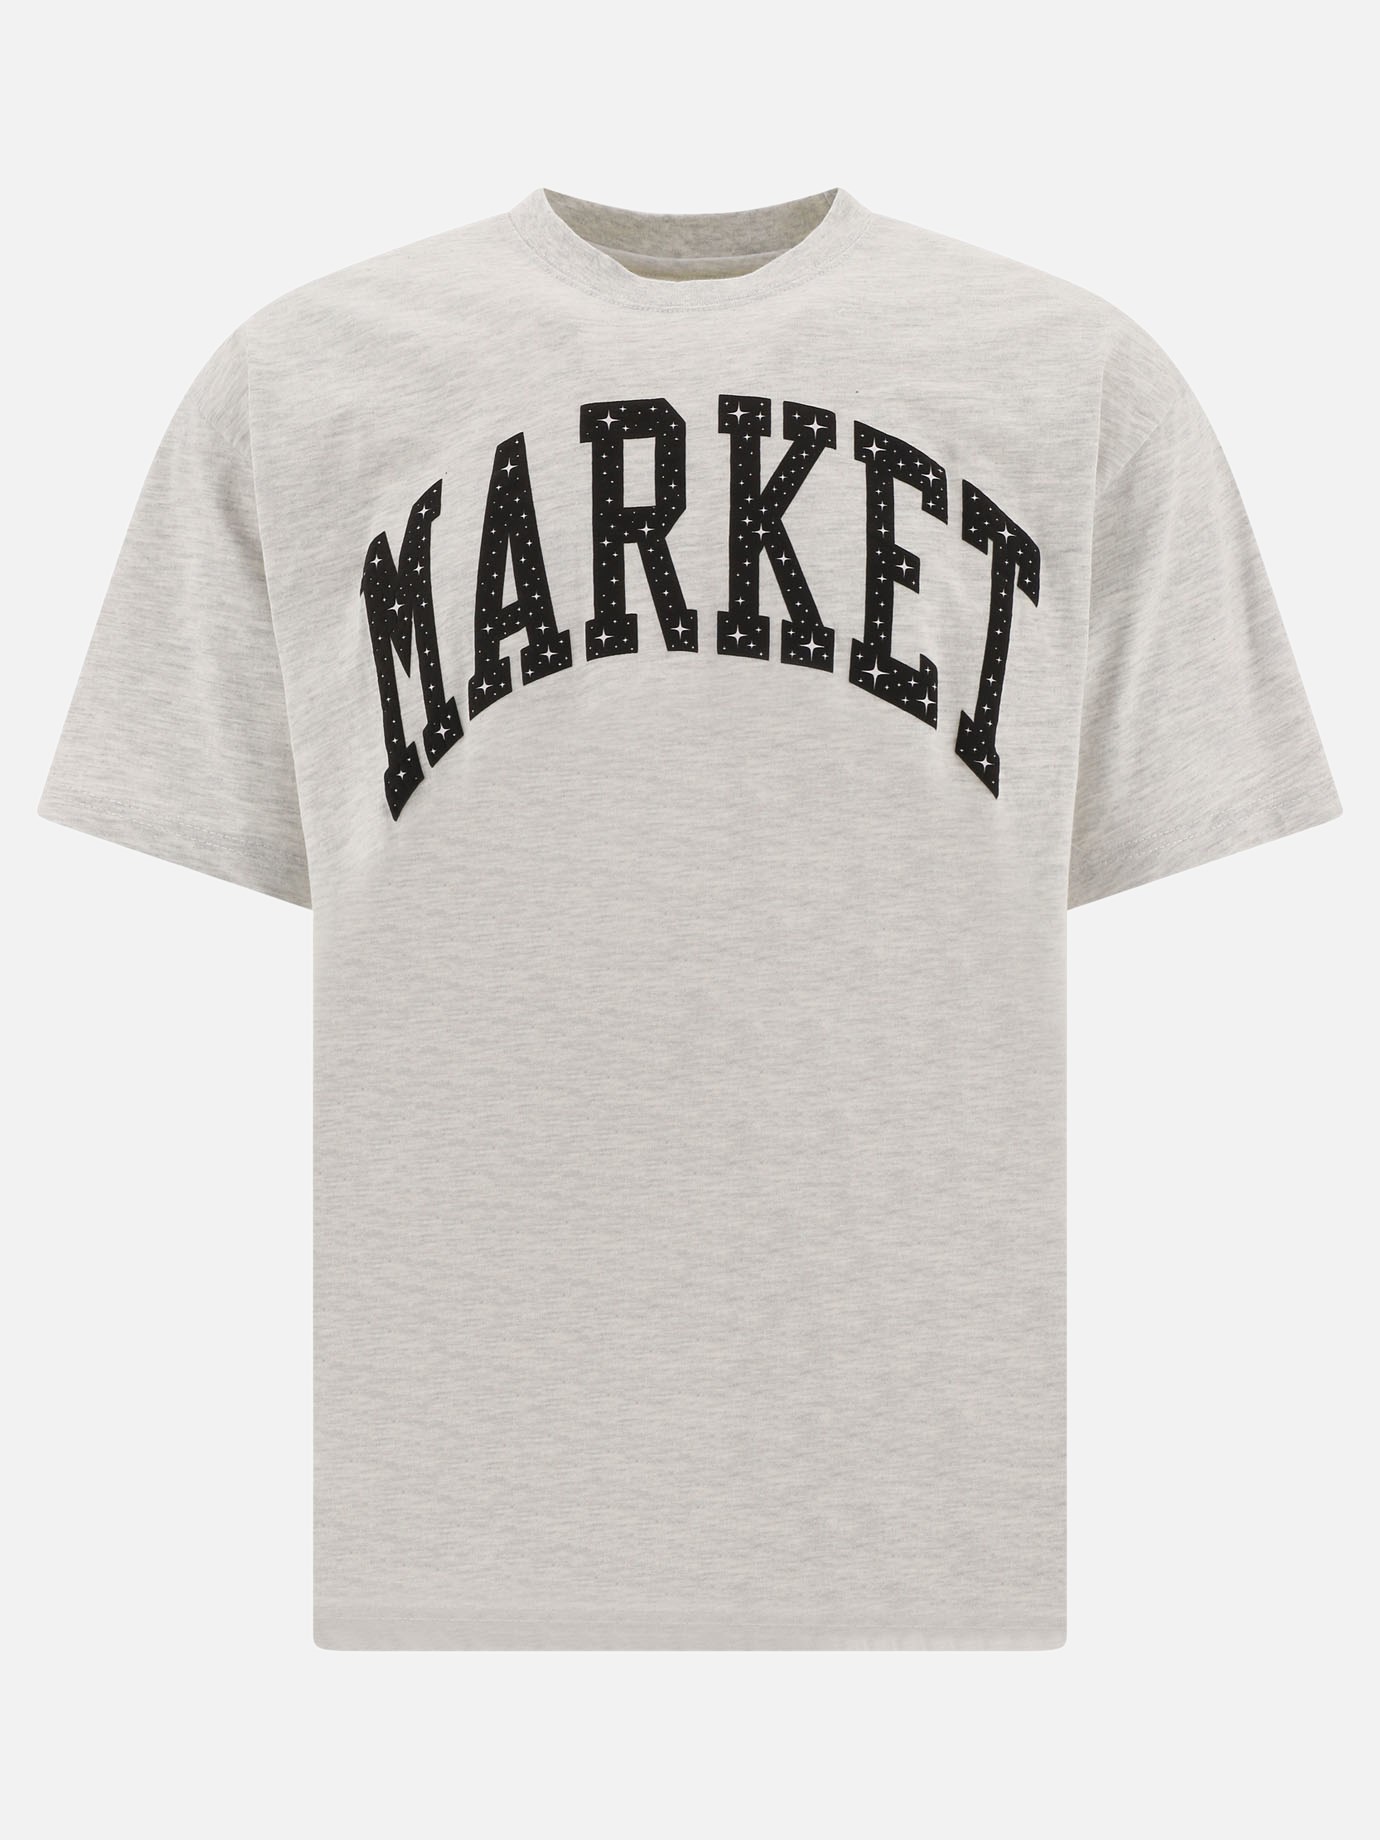 T-shirt  Market Arc by Market - 0